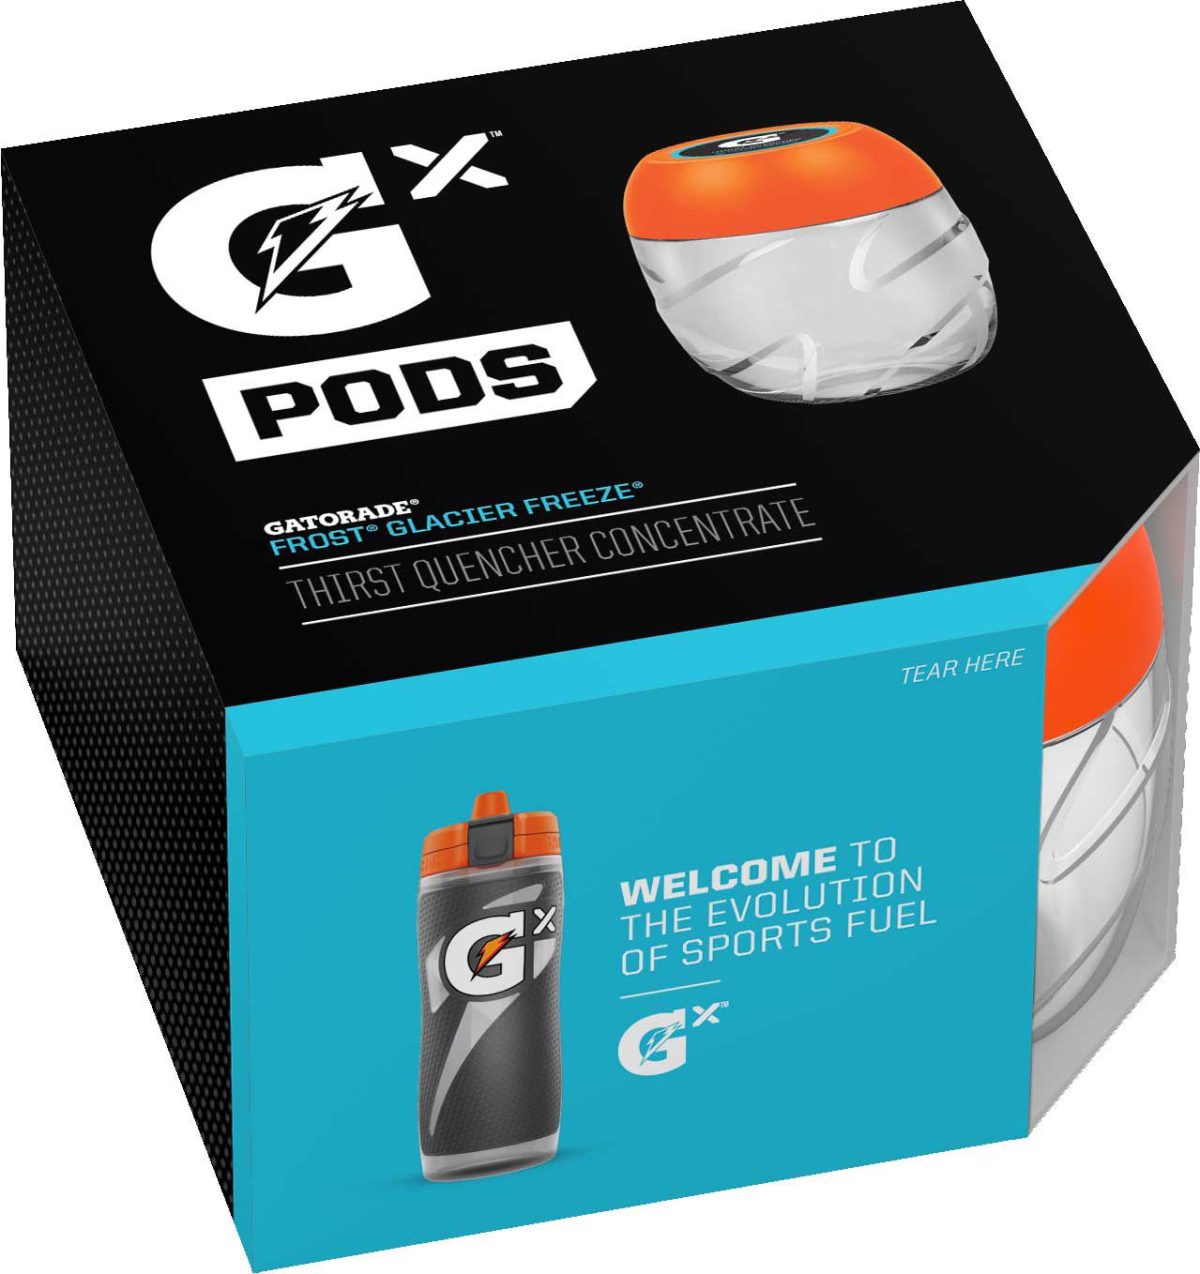 Gatorade Gx Pod 4-Pack